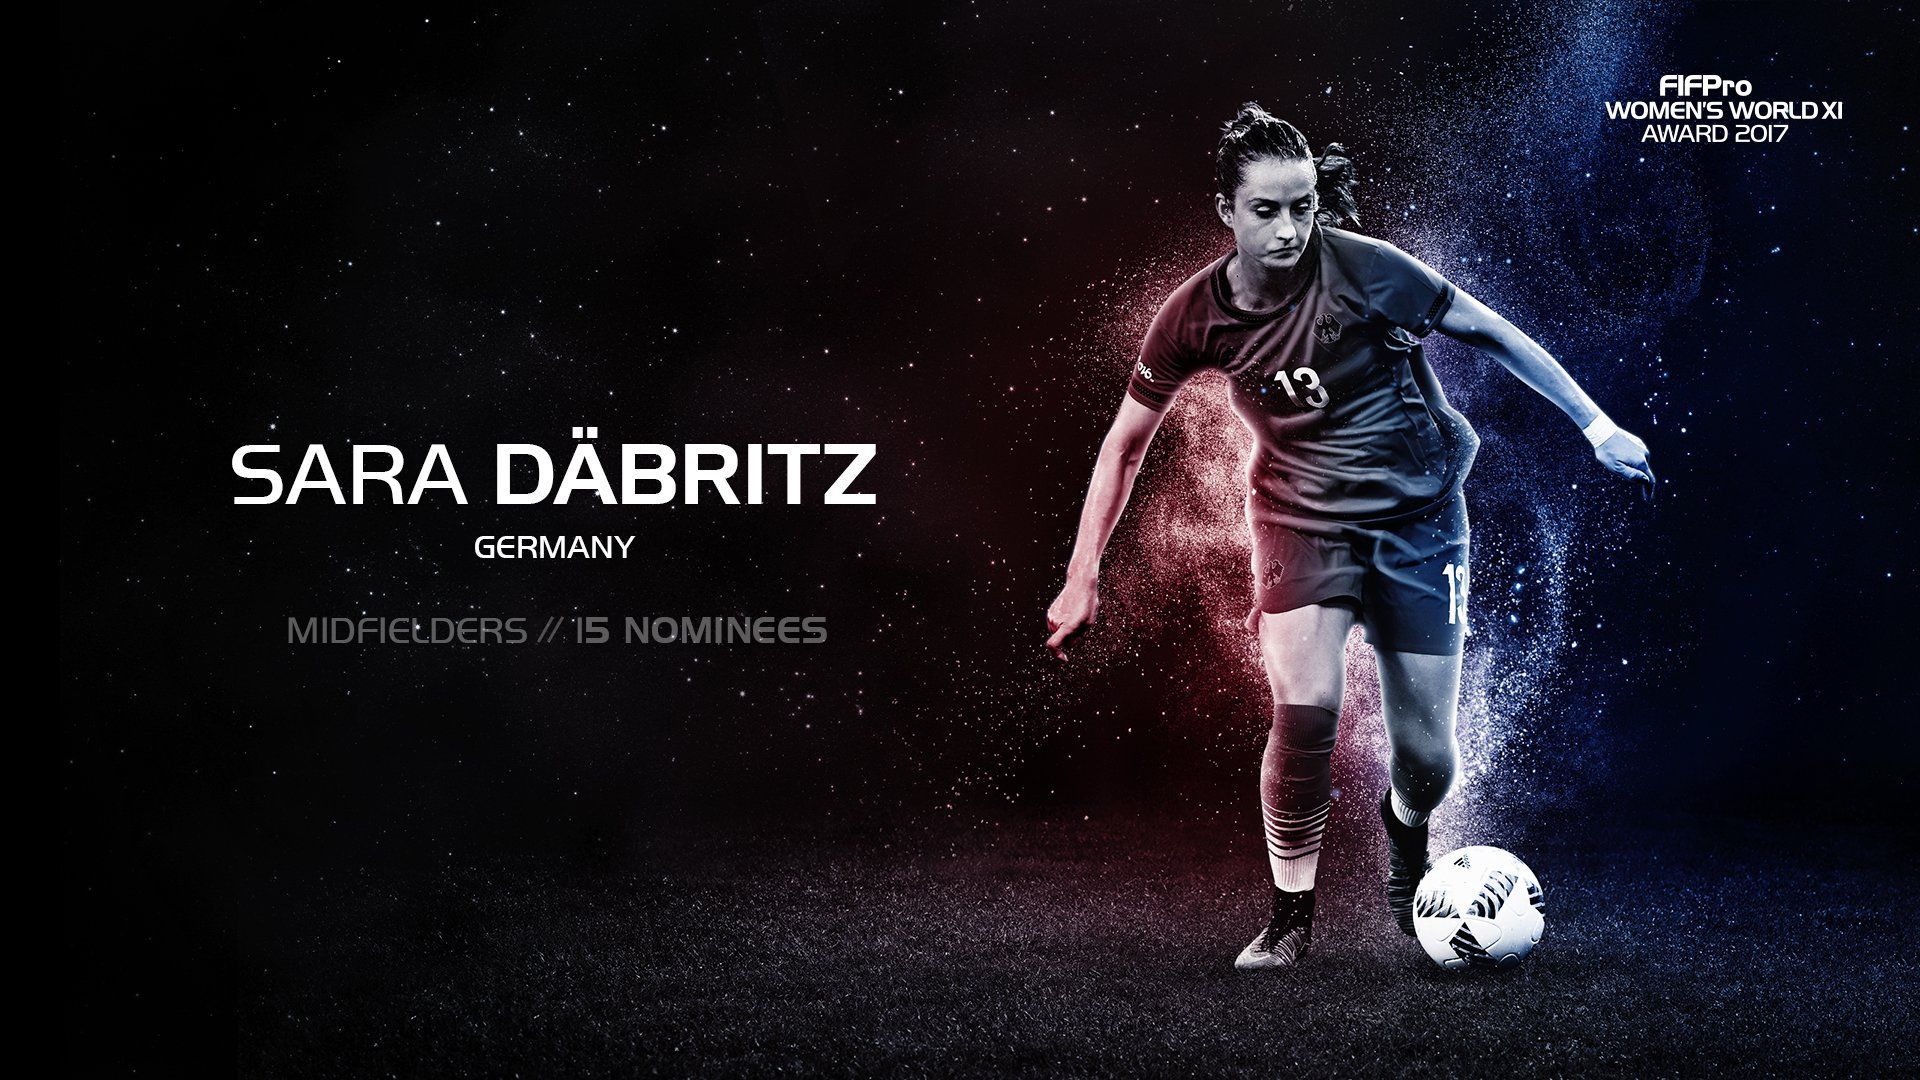 FIFPRO #Sara #Dabritz!